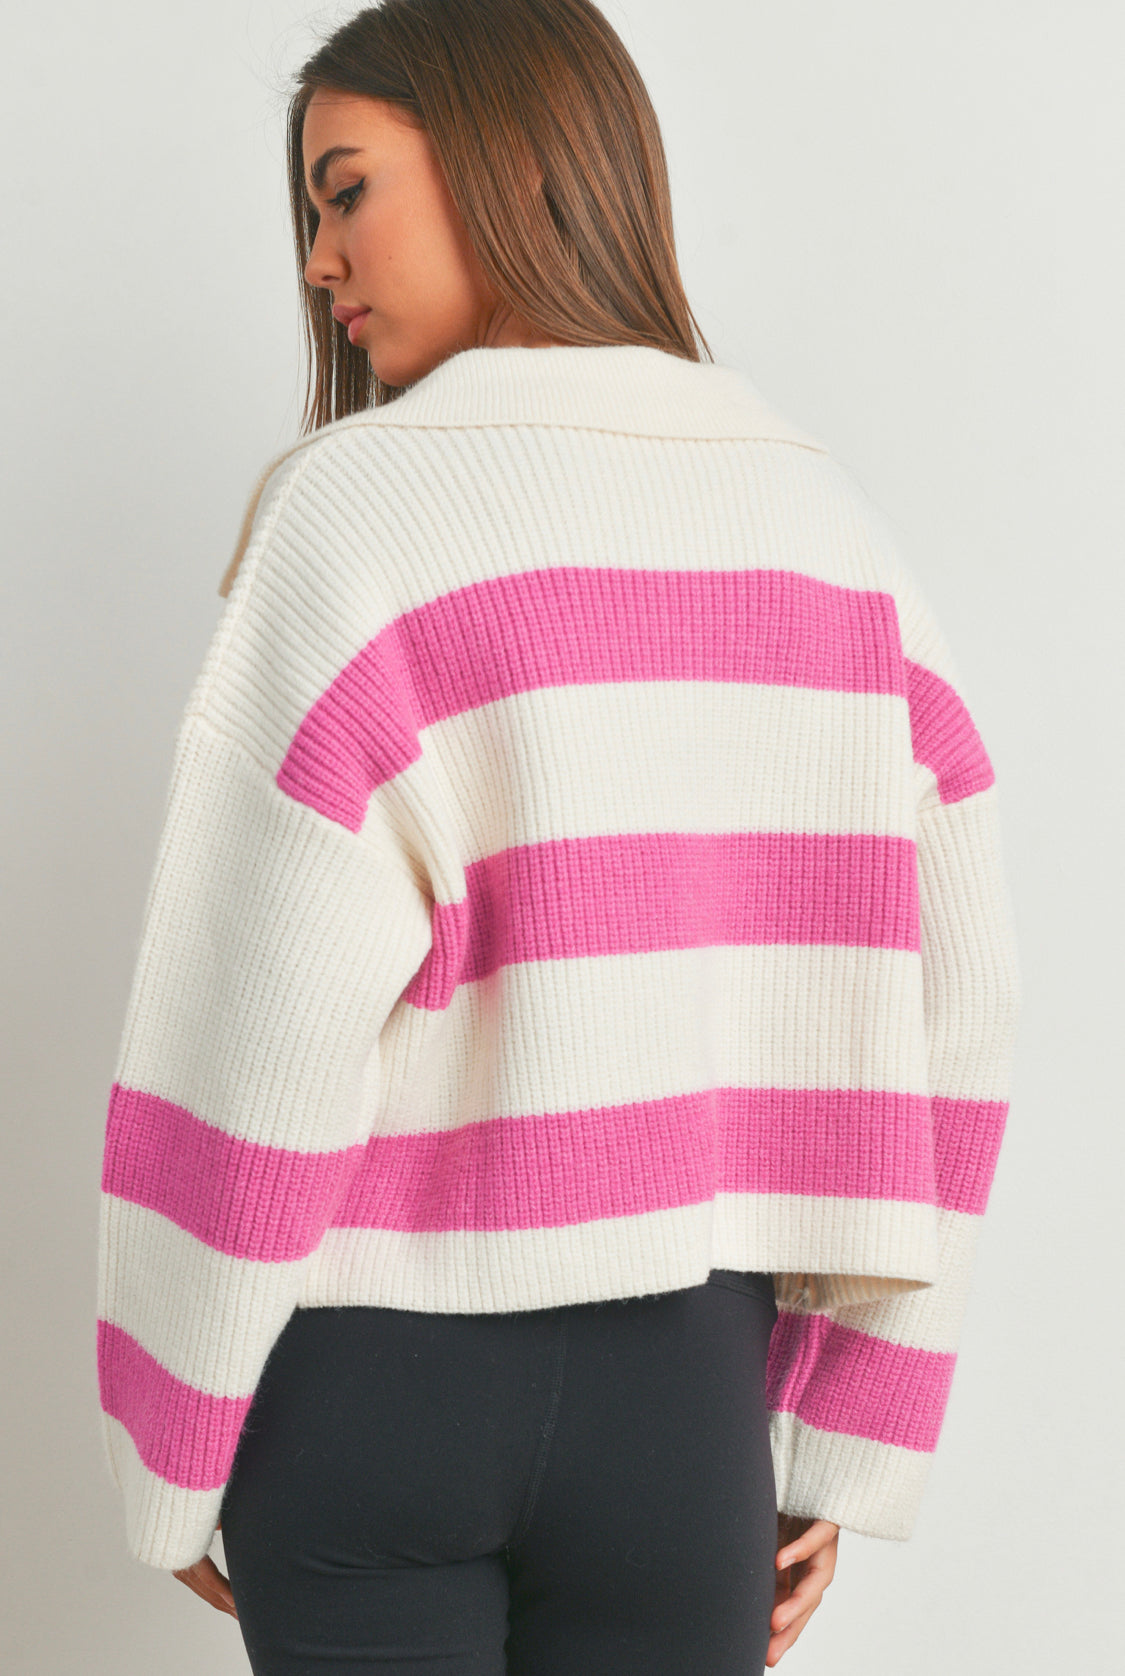 Aspen Sweater top